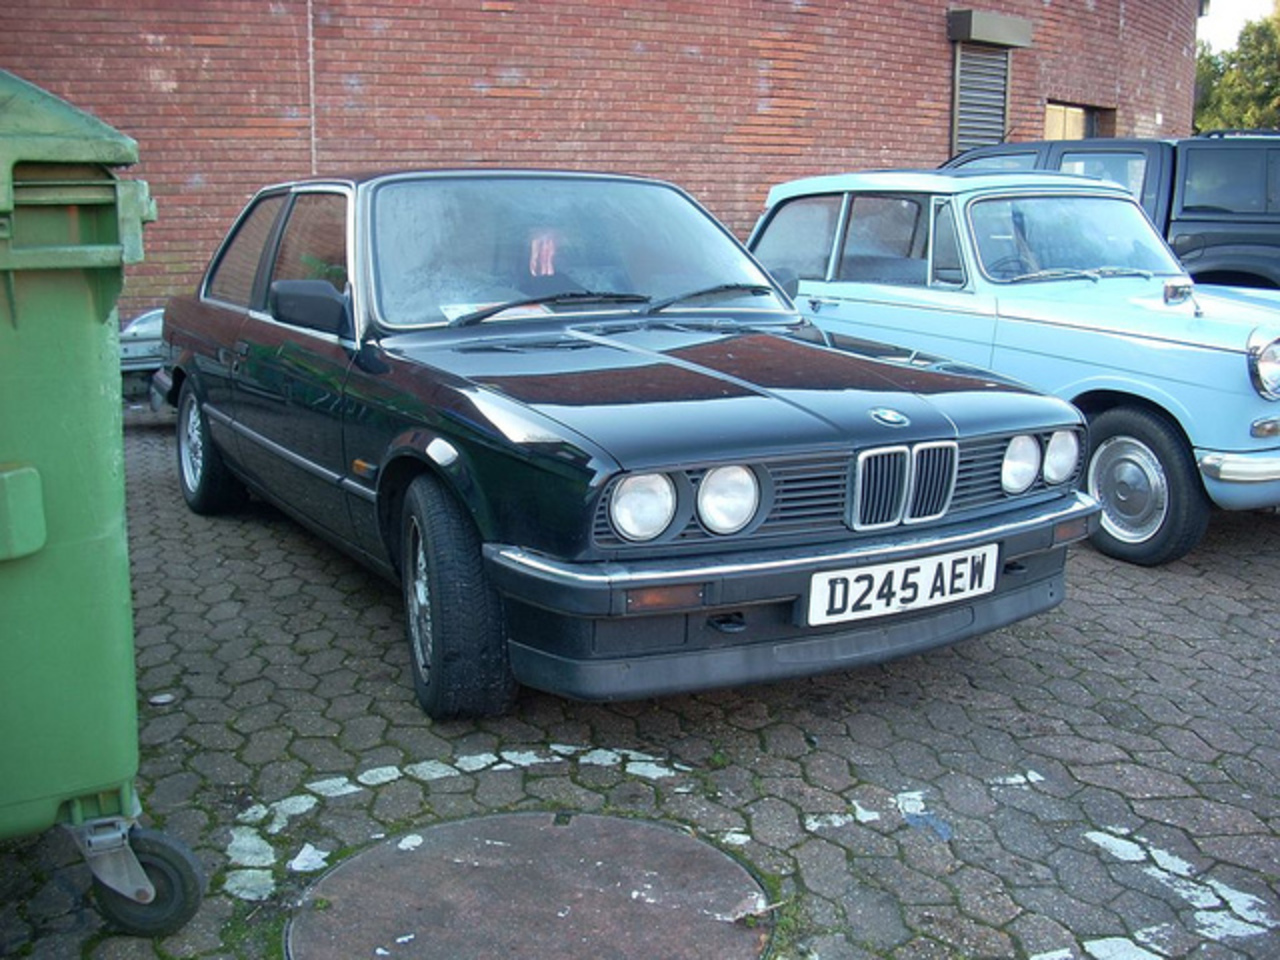 1986 BMW 316i | Flickr - Photo Sharing!